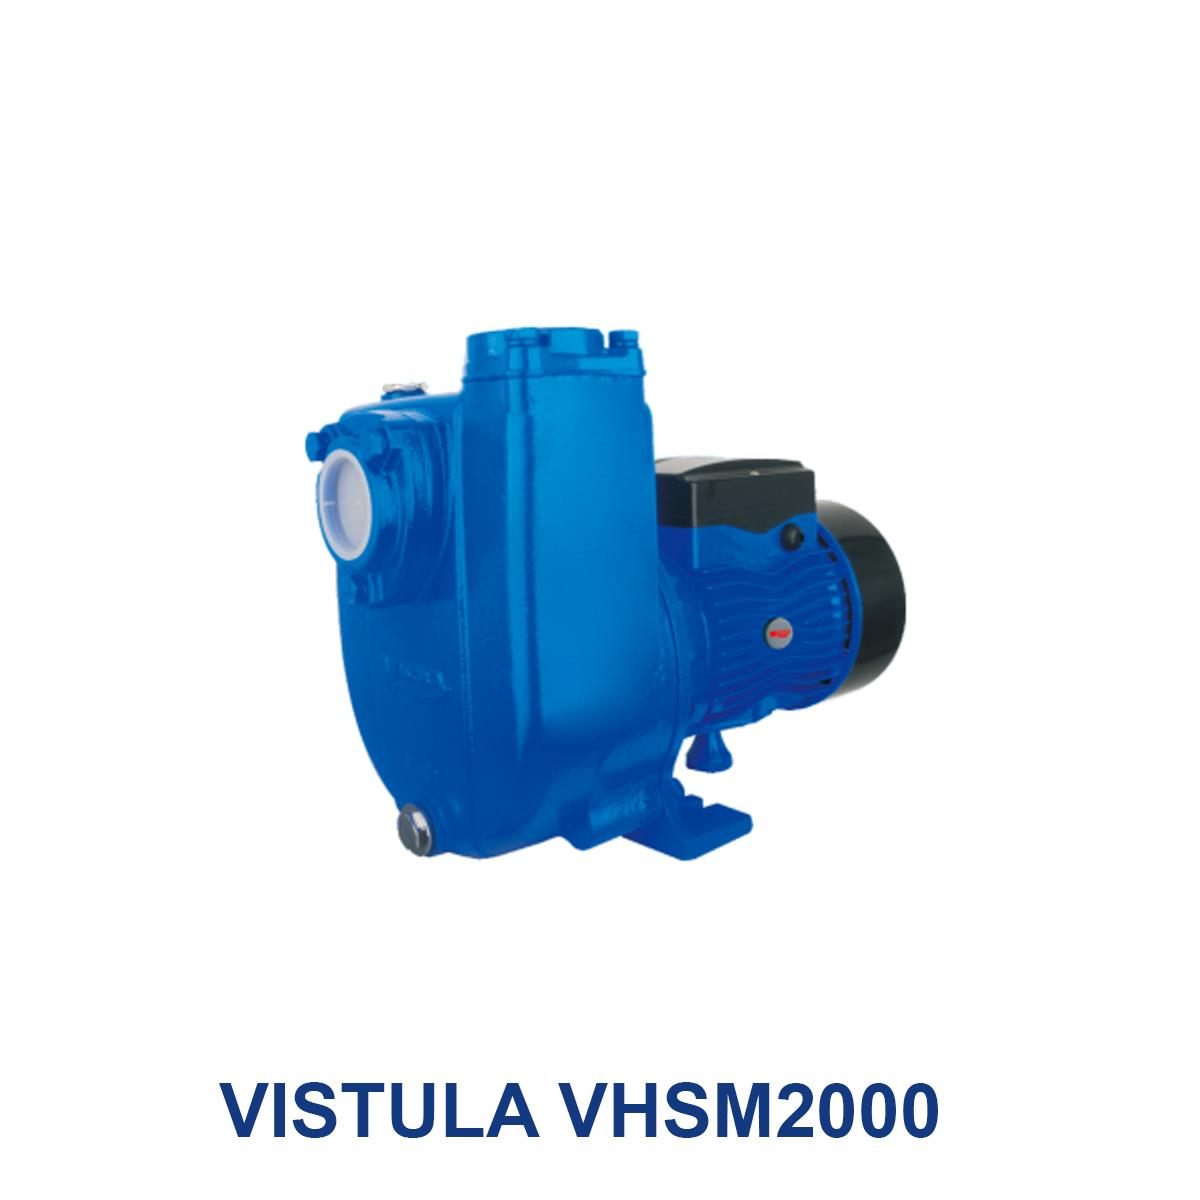 VISTULA-VHSM2000